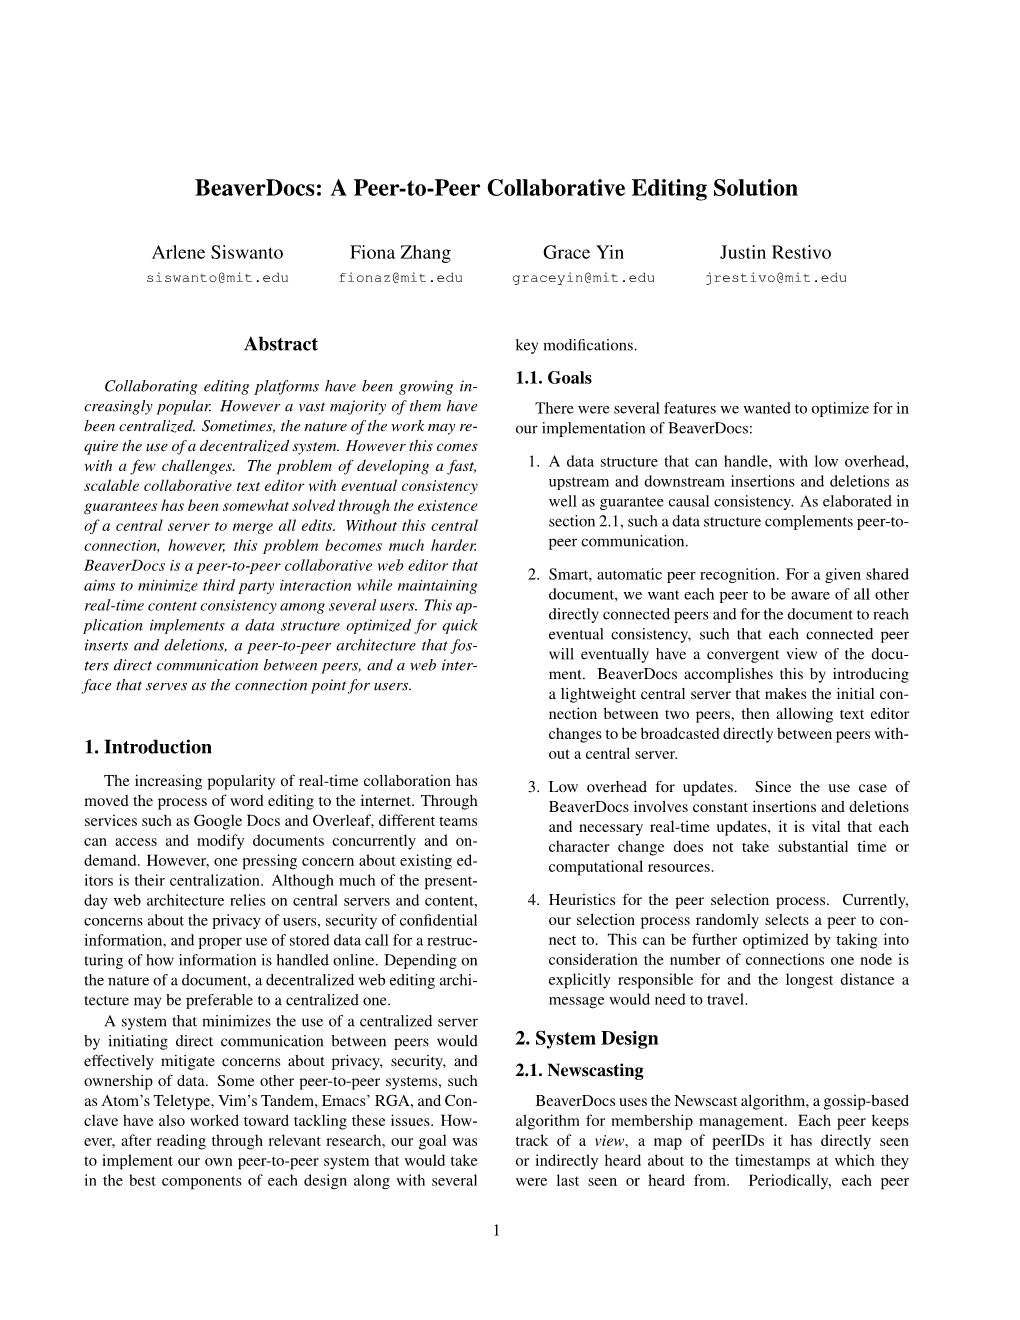 Beaverdocs: a Peer-To-Peer Collaborative Editing Solution